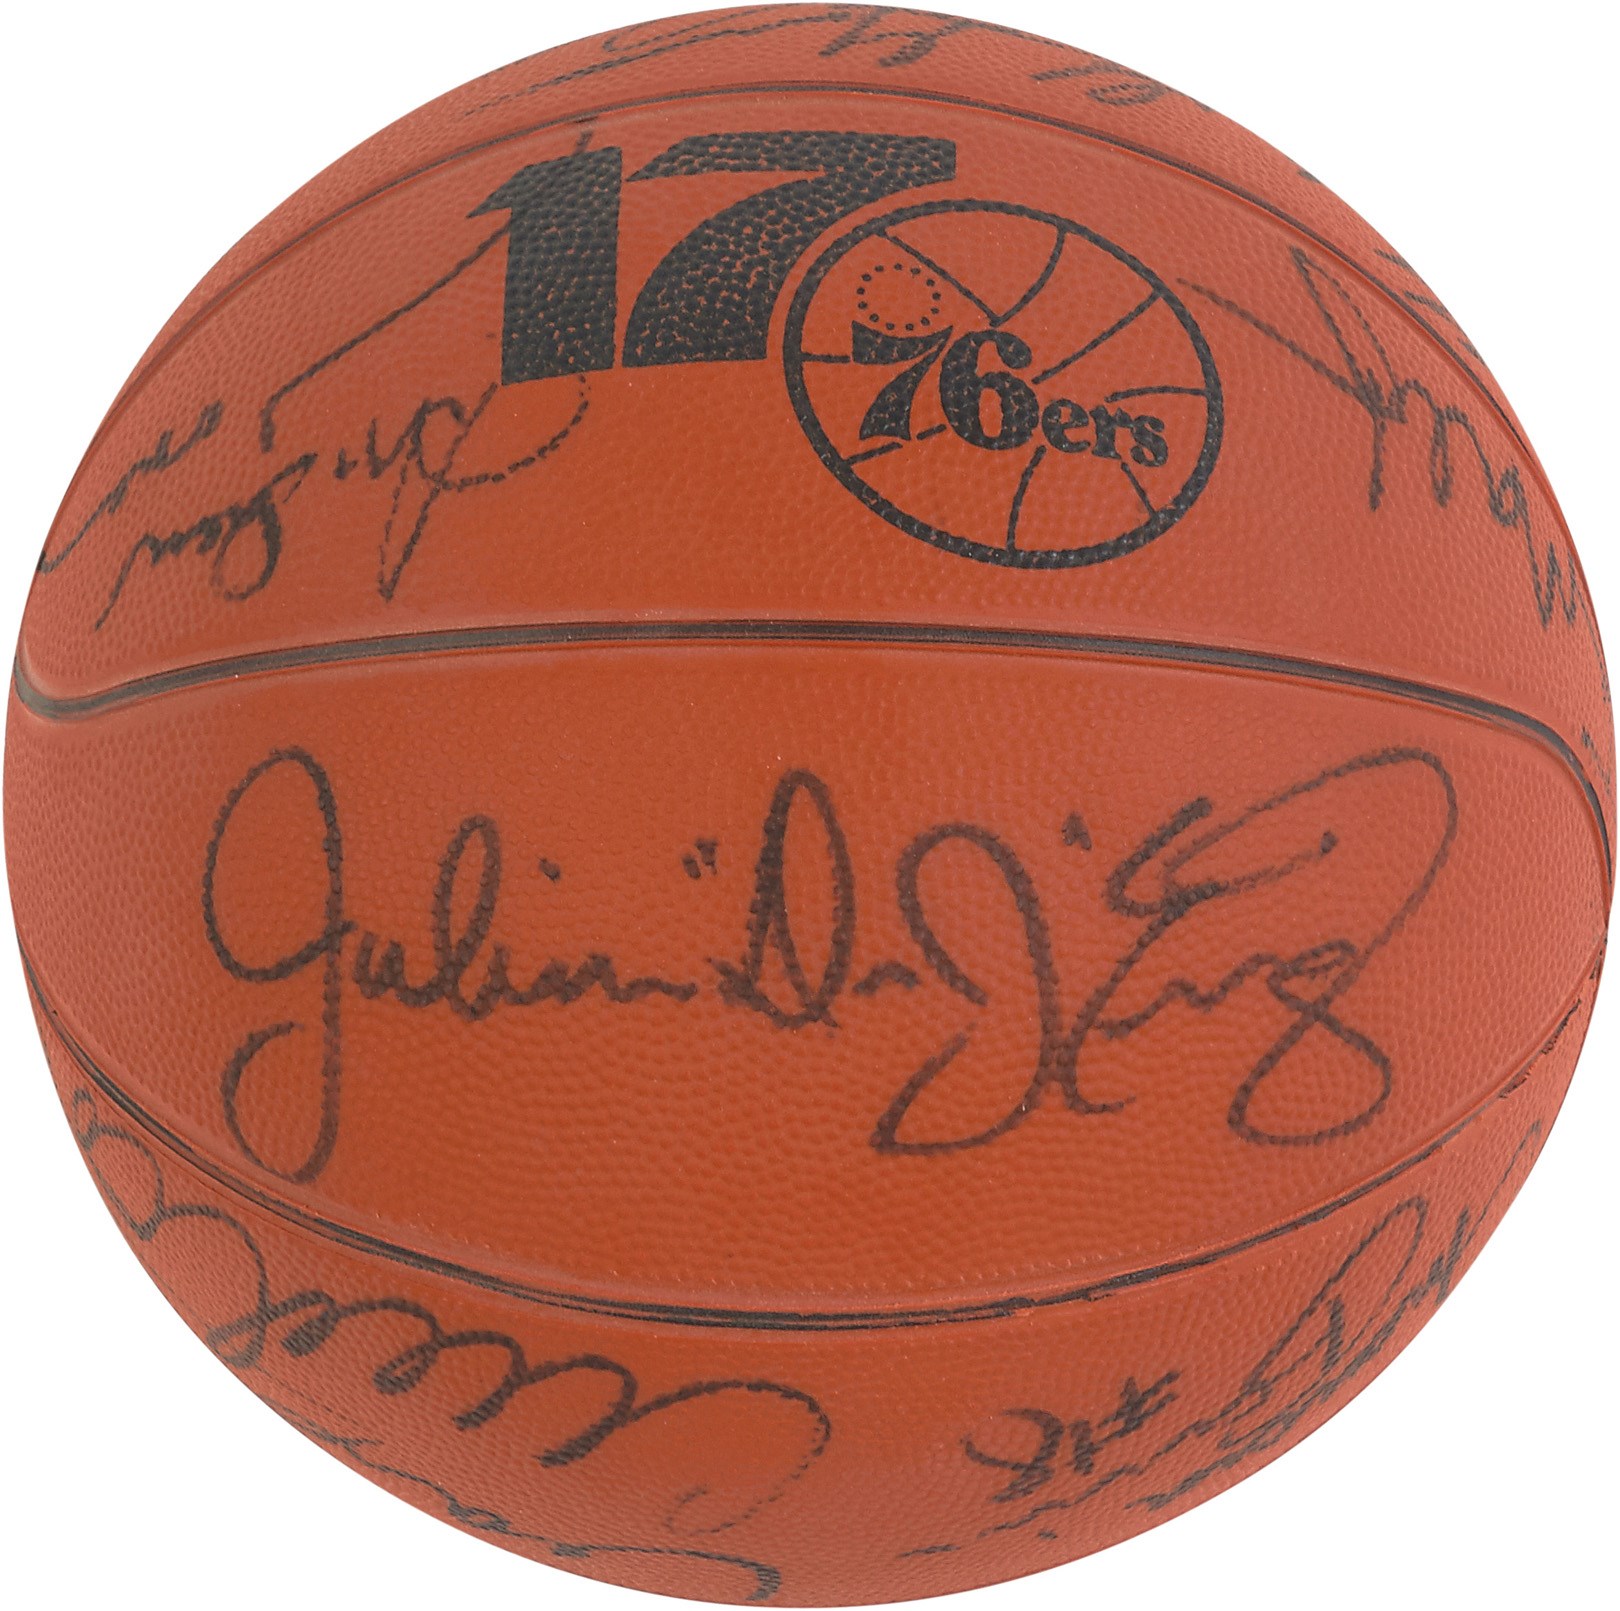 - 1982-83 World Championship Philadelphia 76ers Signed Basketball (TV Station Promo Prize)